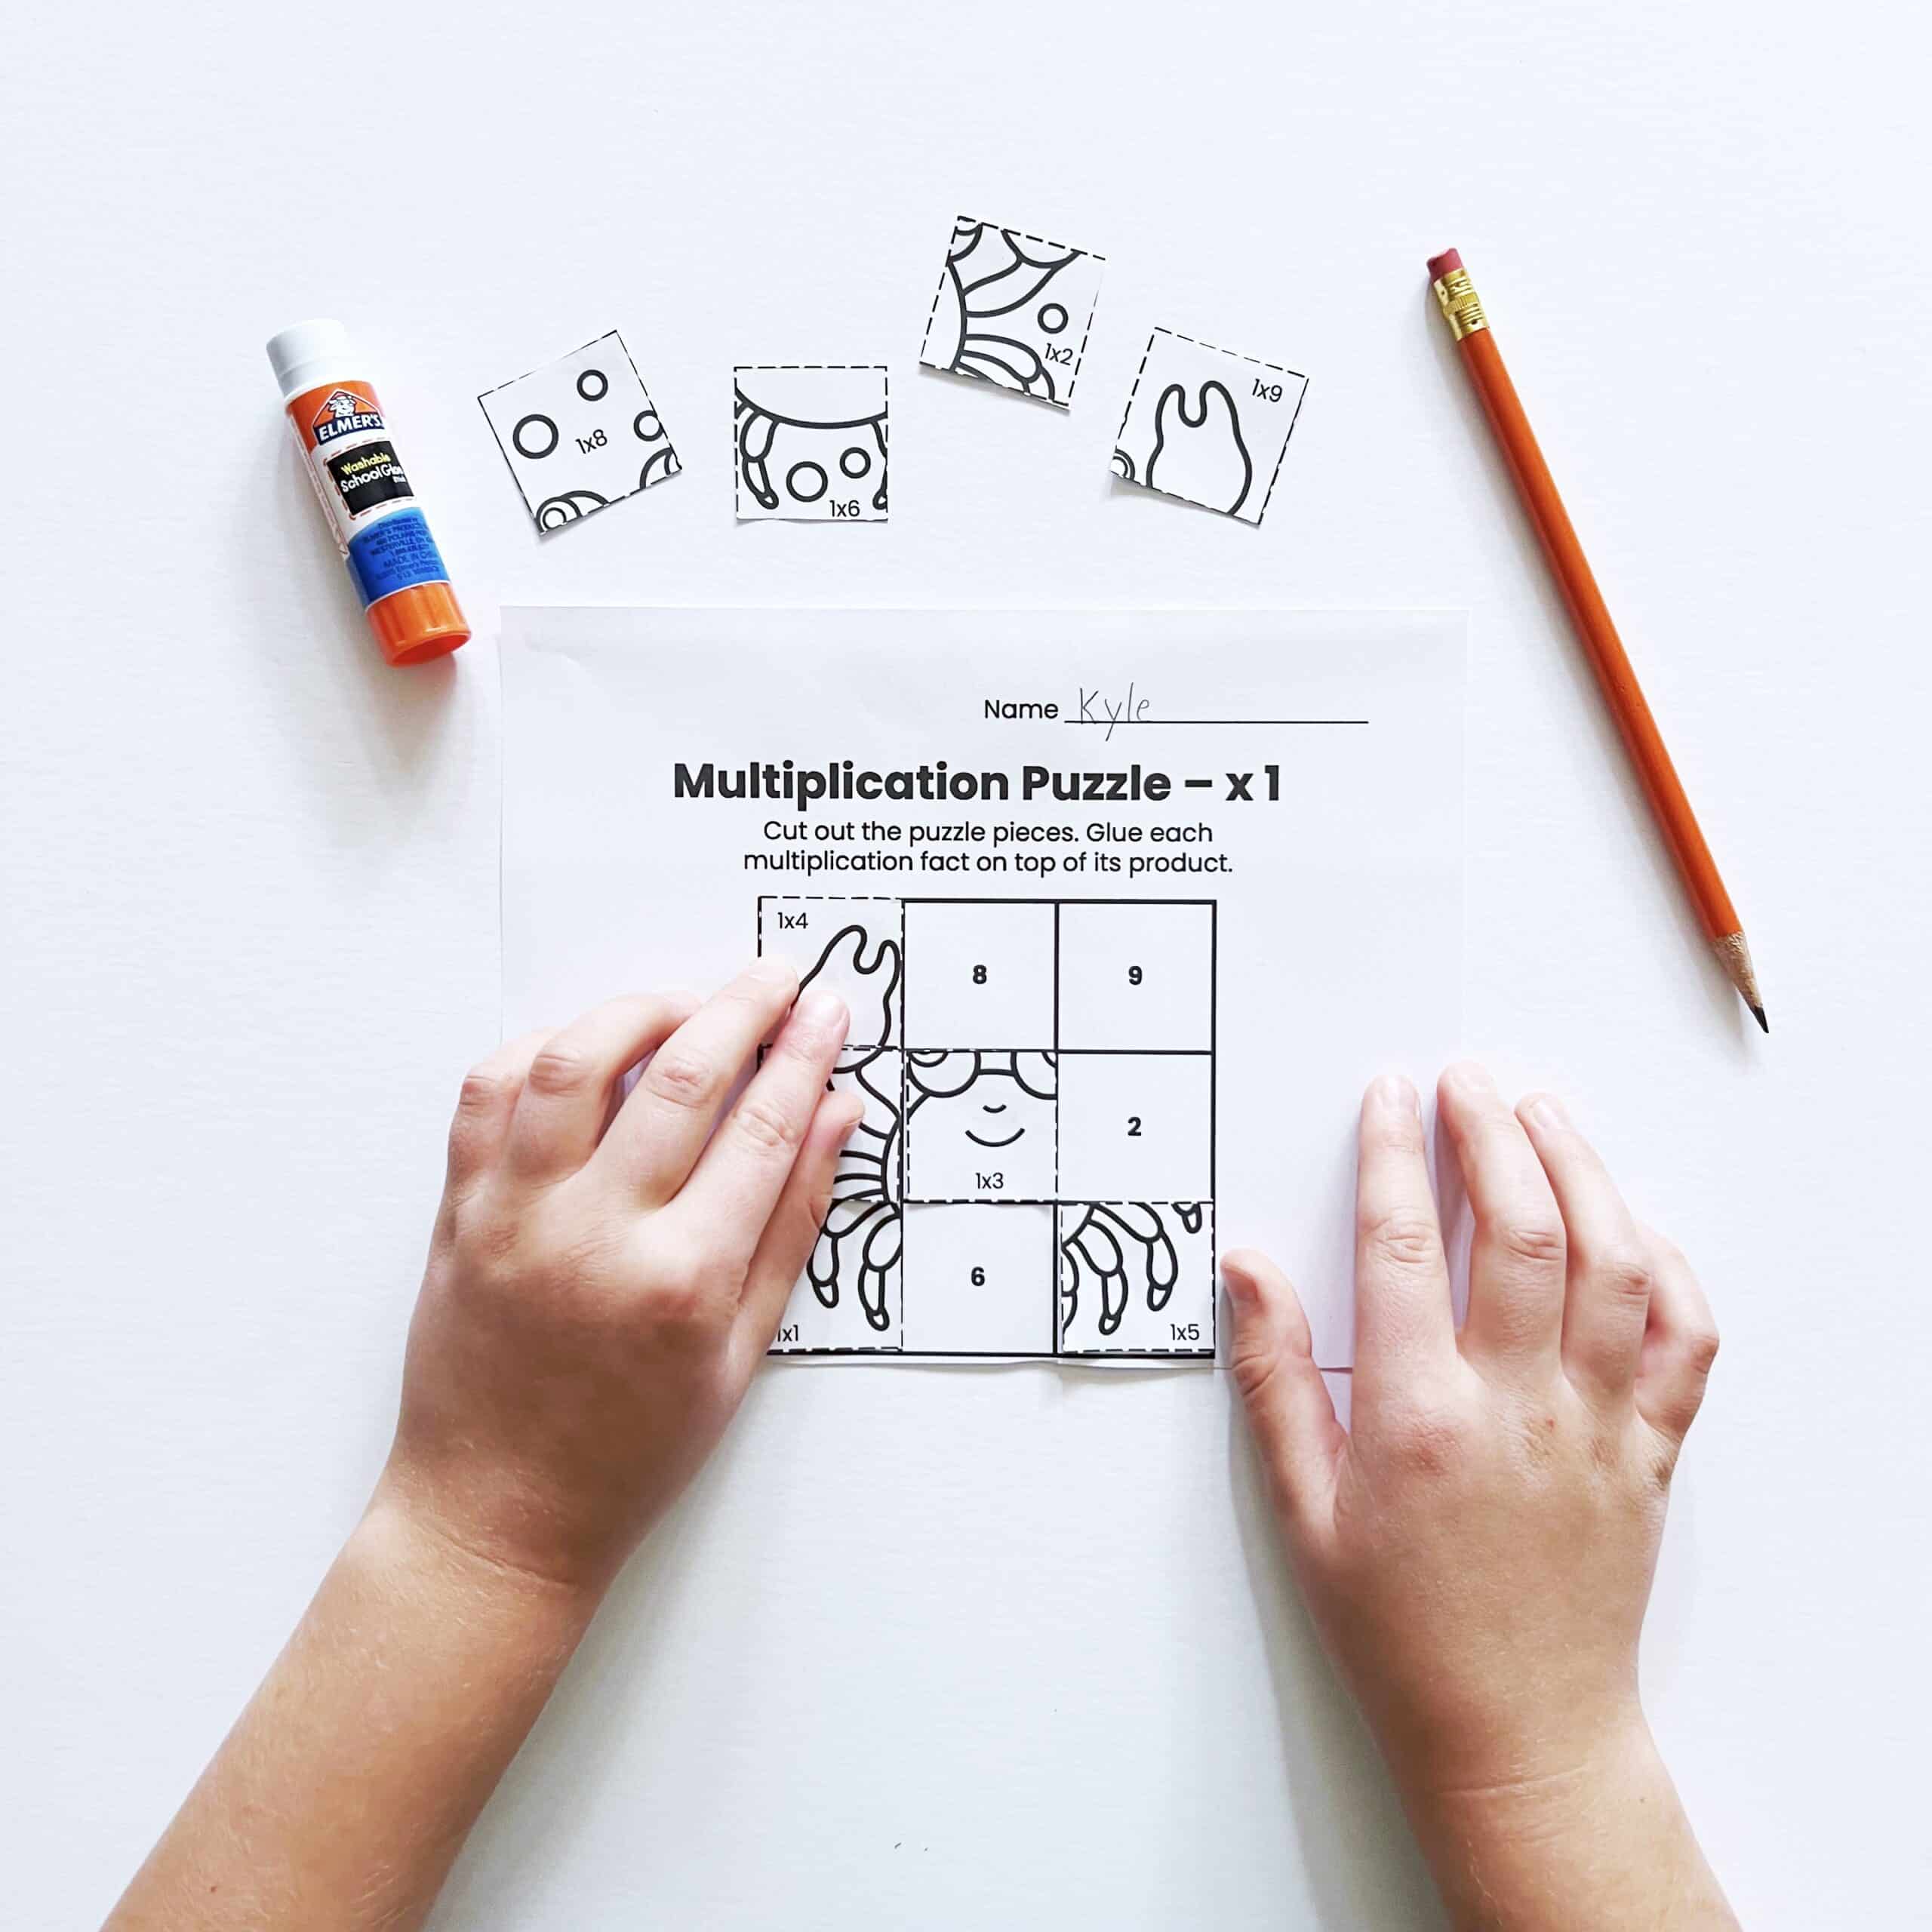 Multiplication Facts mini-games (+google slides version)